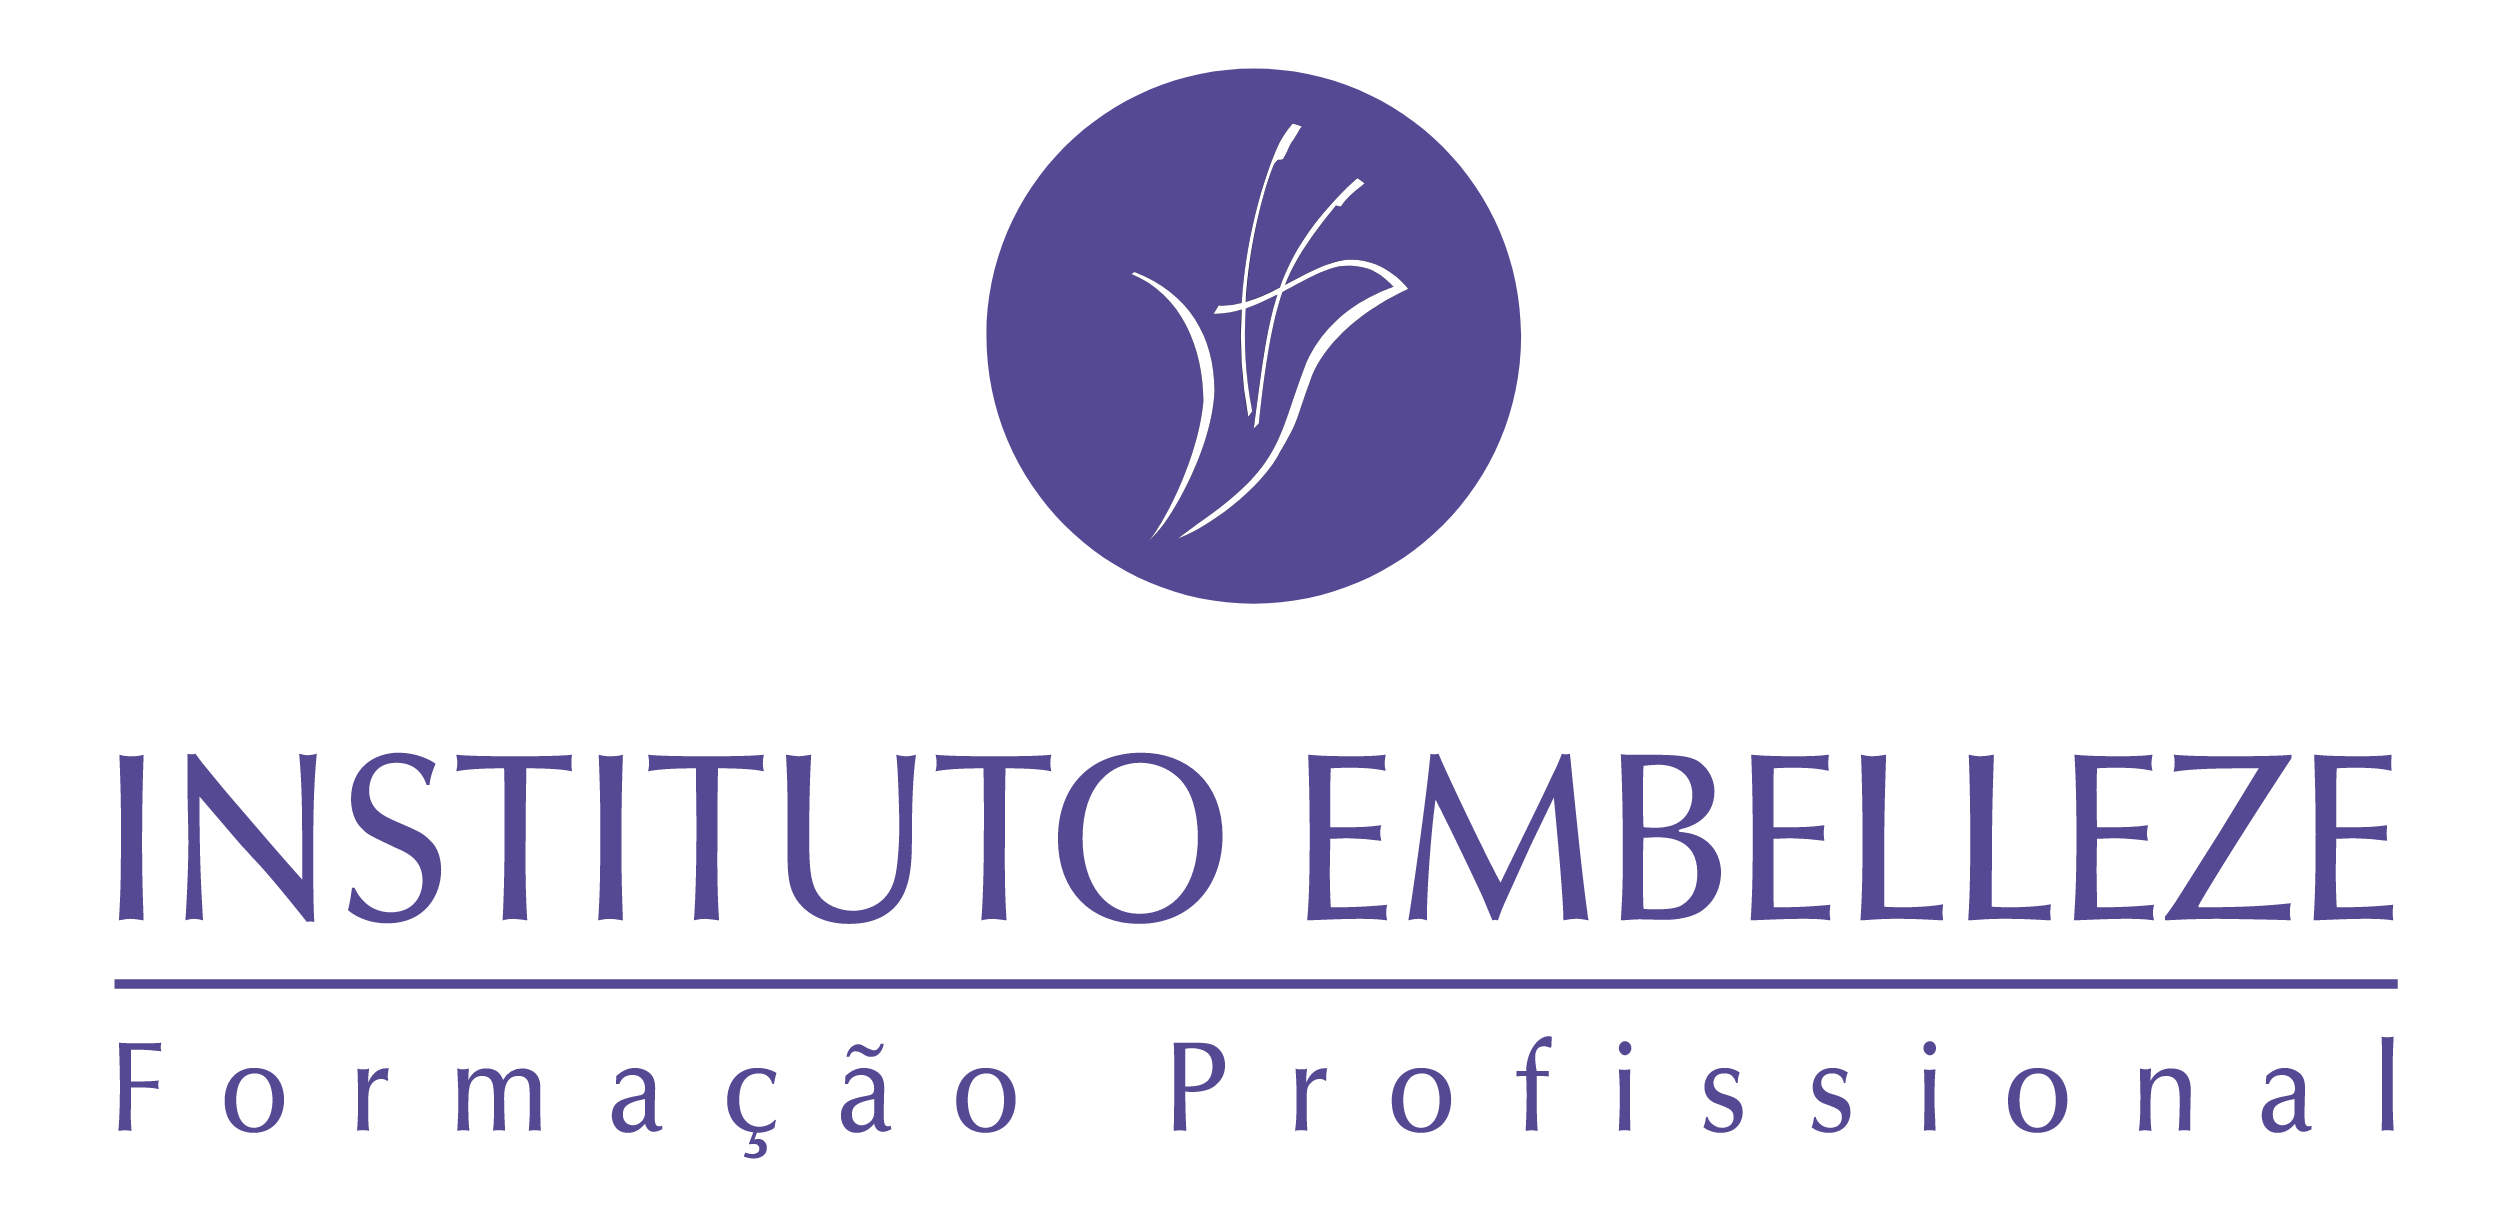 Instituto Embelleze Logo Logos